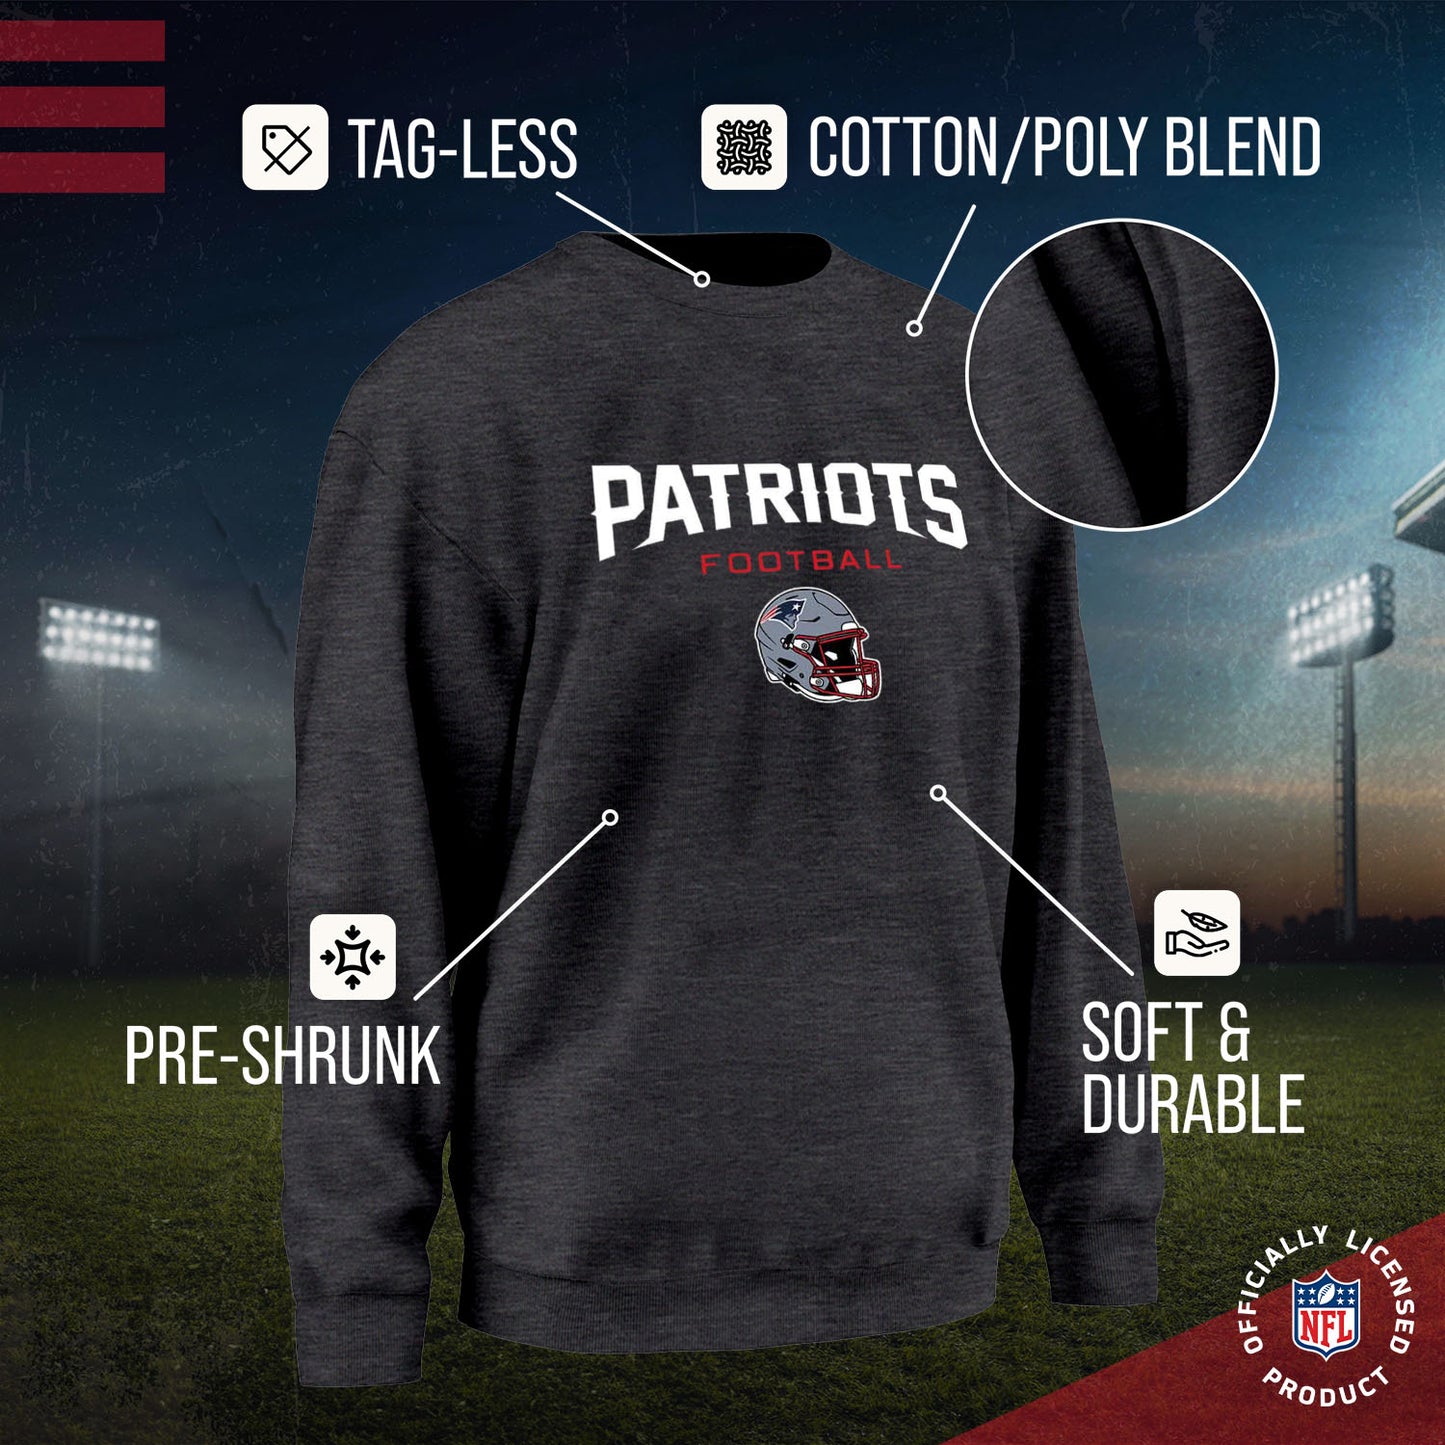 New England Patriots Adult NFL Football Helmet Heather Crewneck Sweatshirt - Charcoal